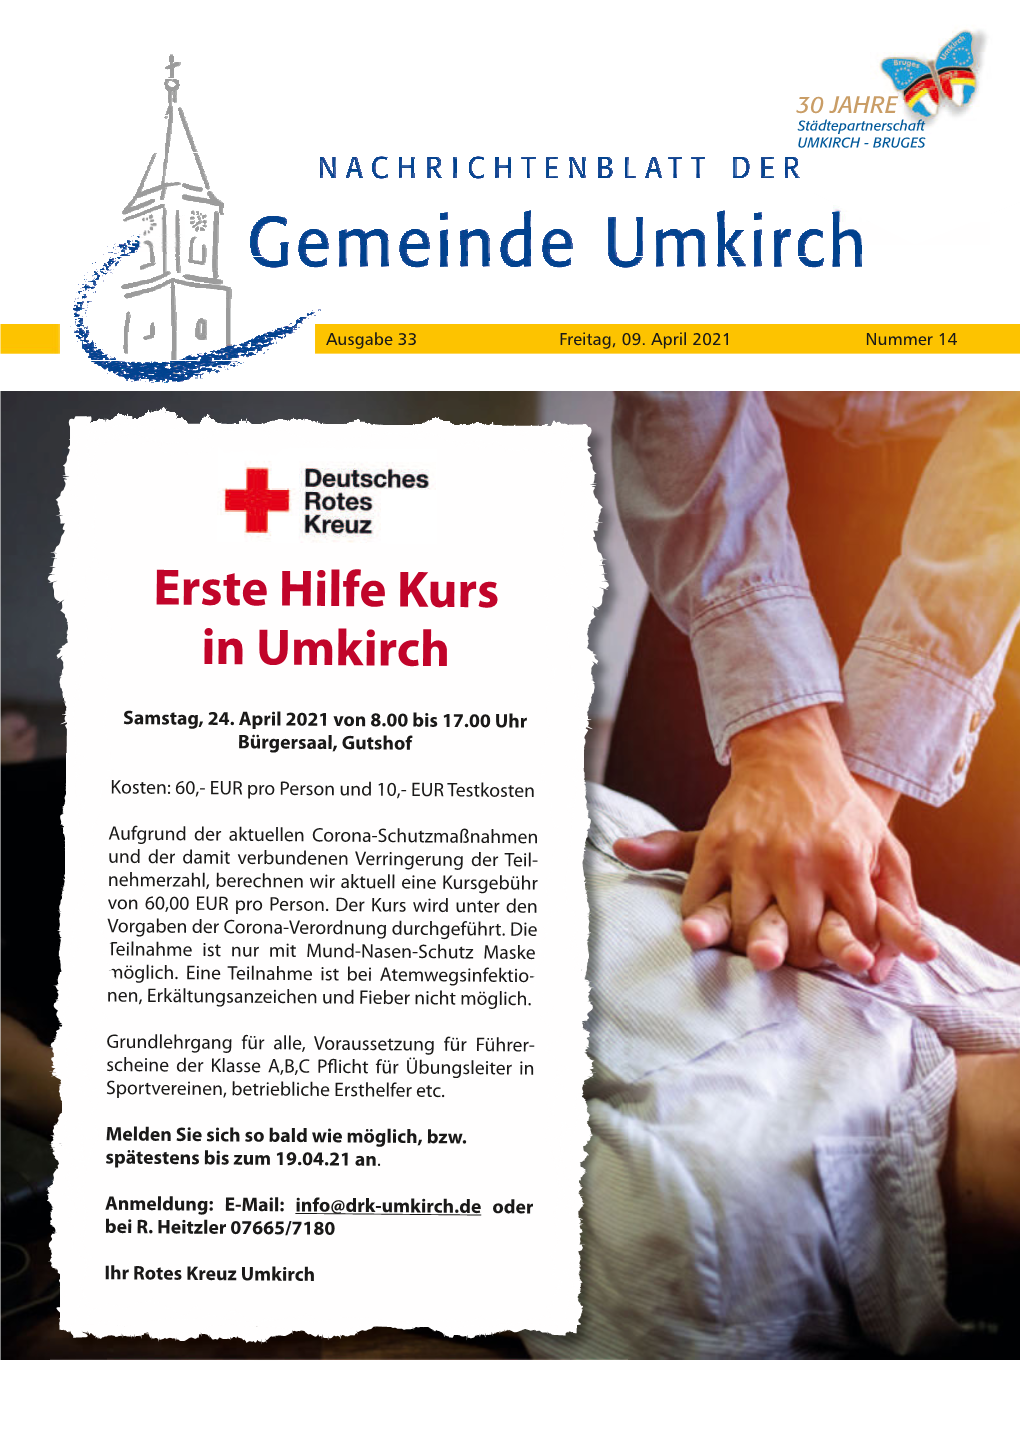 Erste Hilfe Kurs in Umkirch